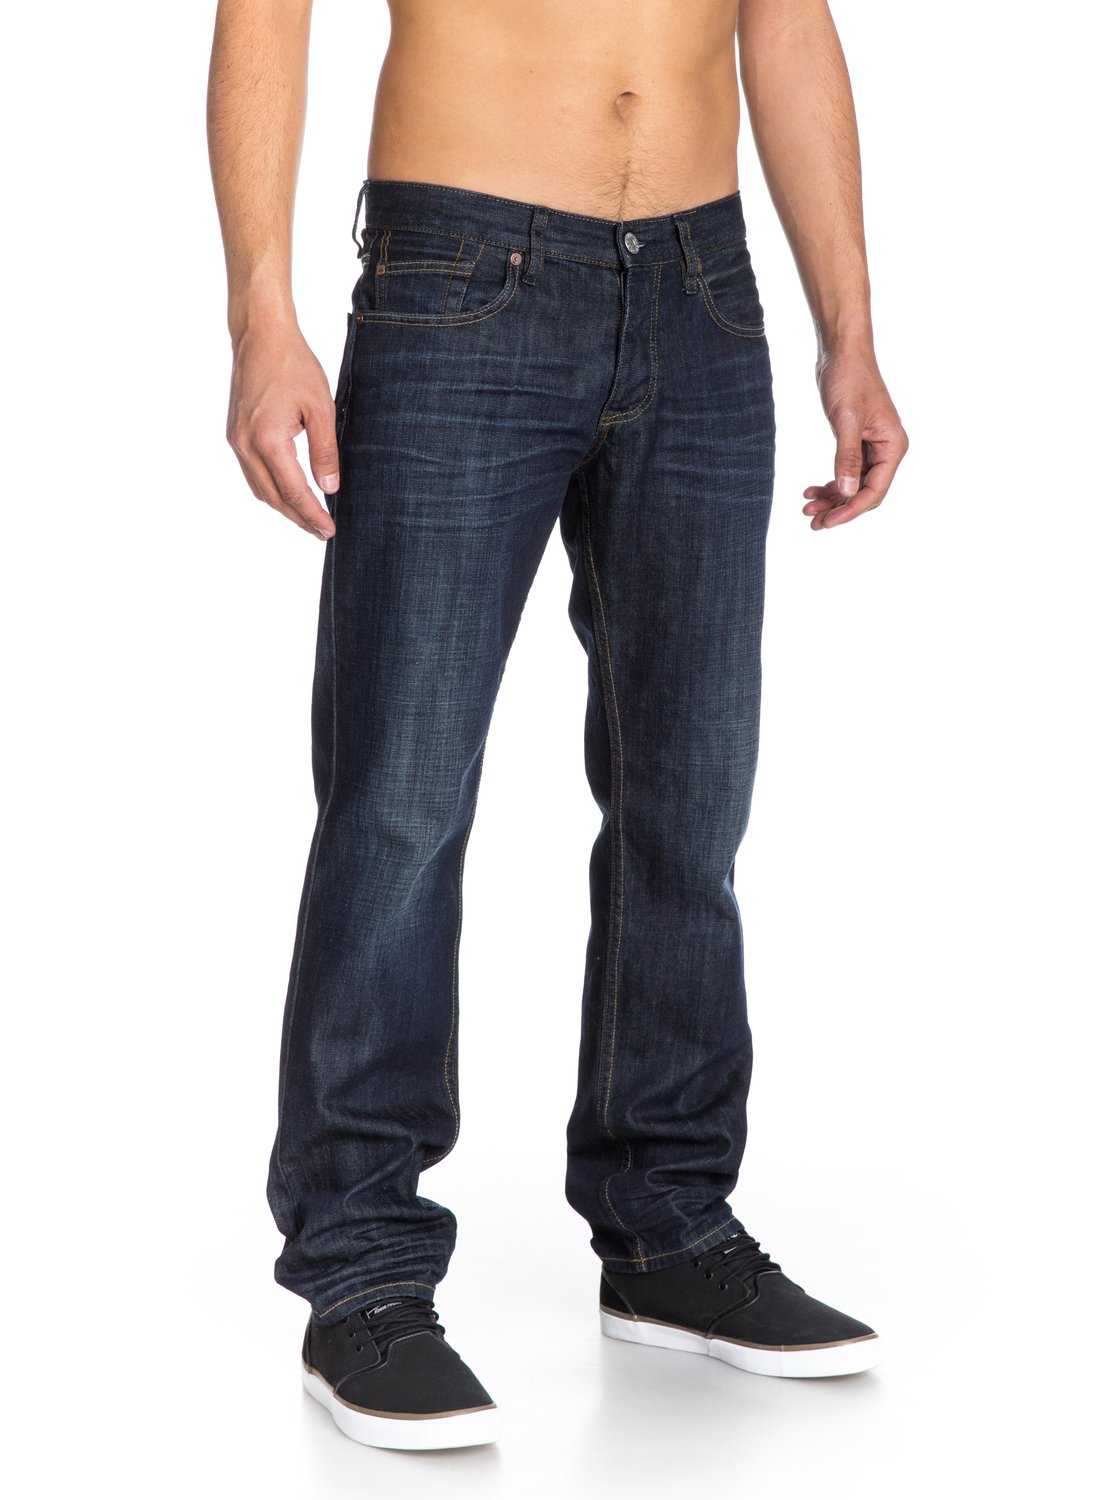 Sequel Regular Fit Jeans, 32